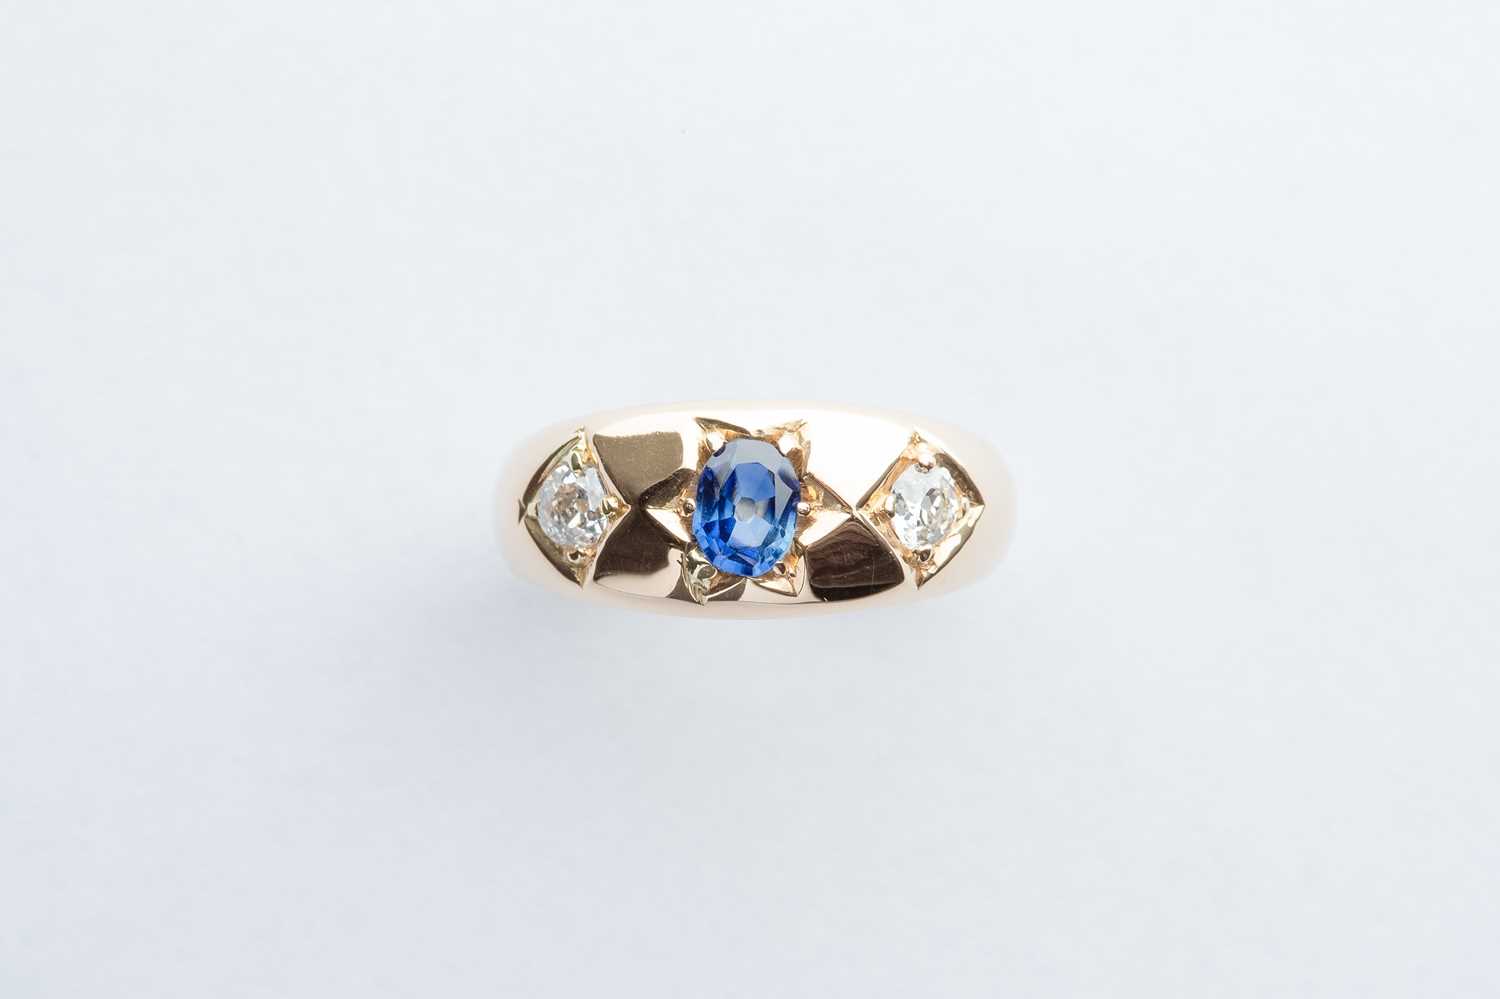 Lot 43 - A Gold Diamond & Saphire Ring